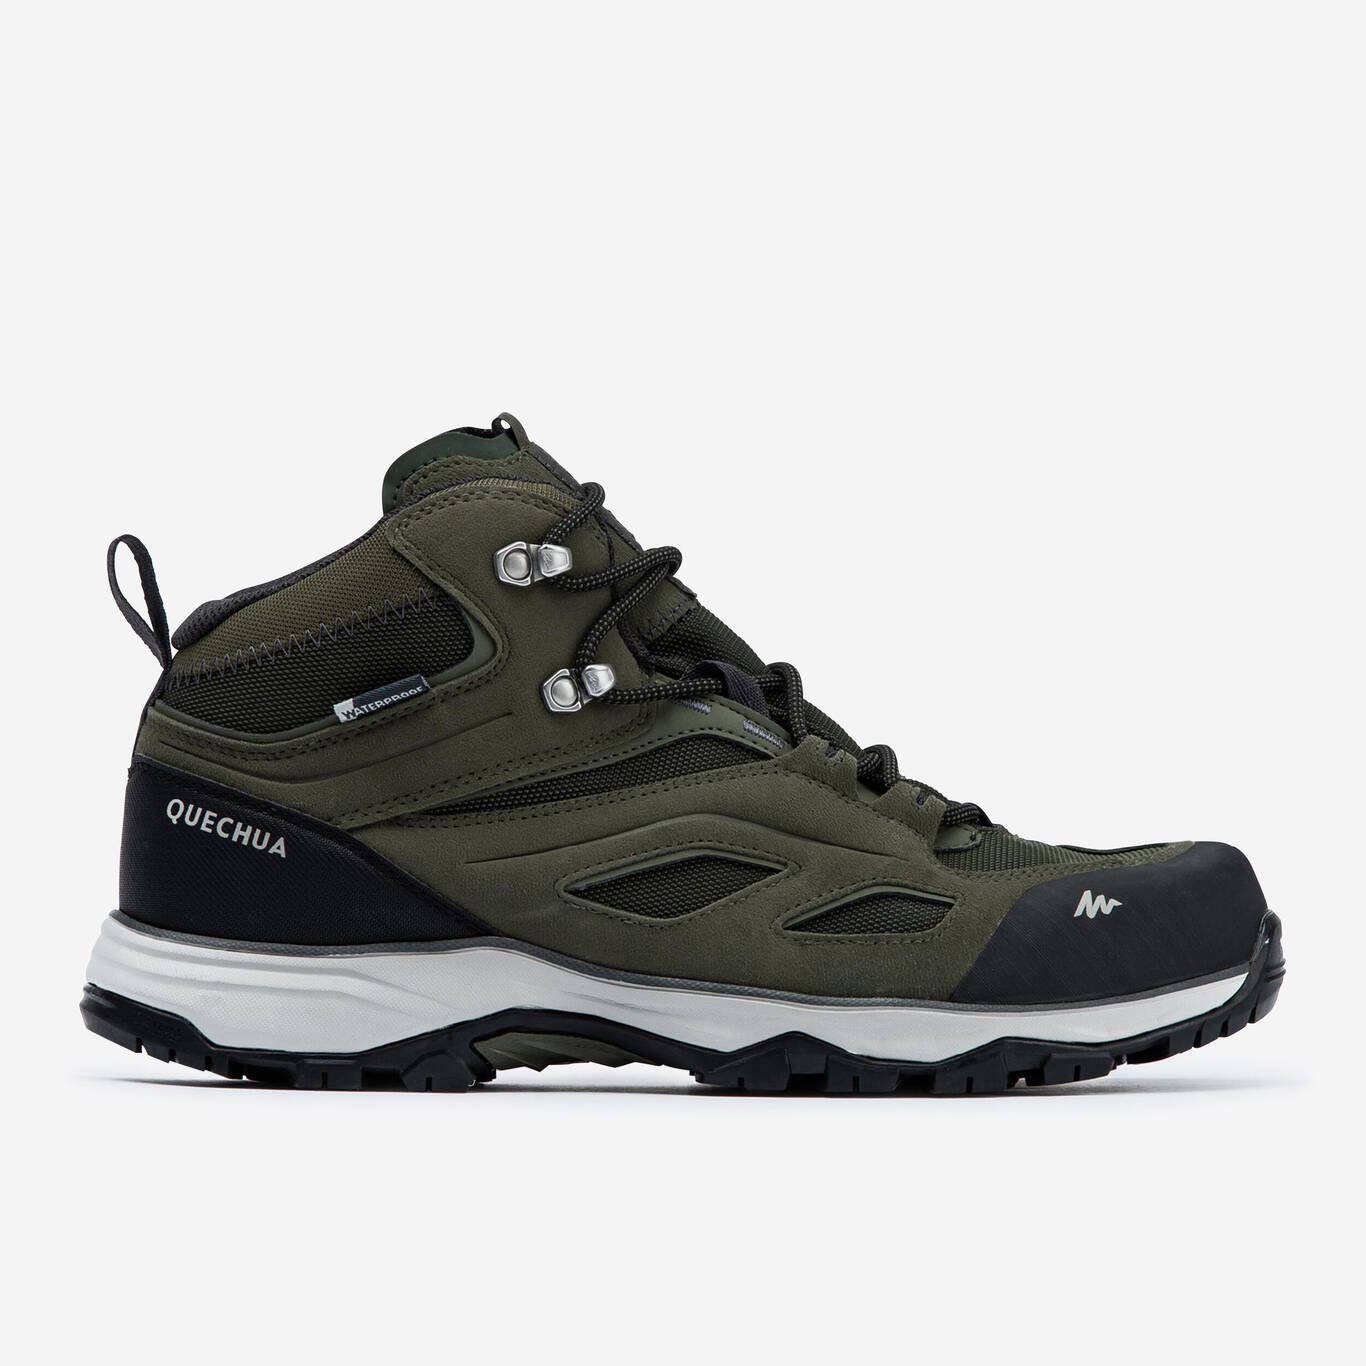 Men's waterproof mountain hiking Boot-shoes - MH100 Mid - Khaki